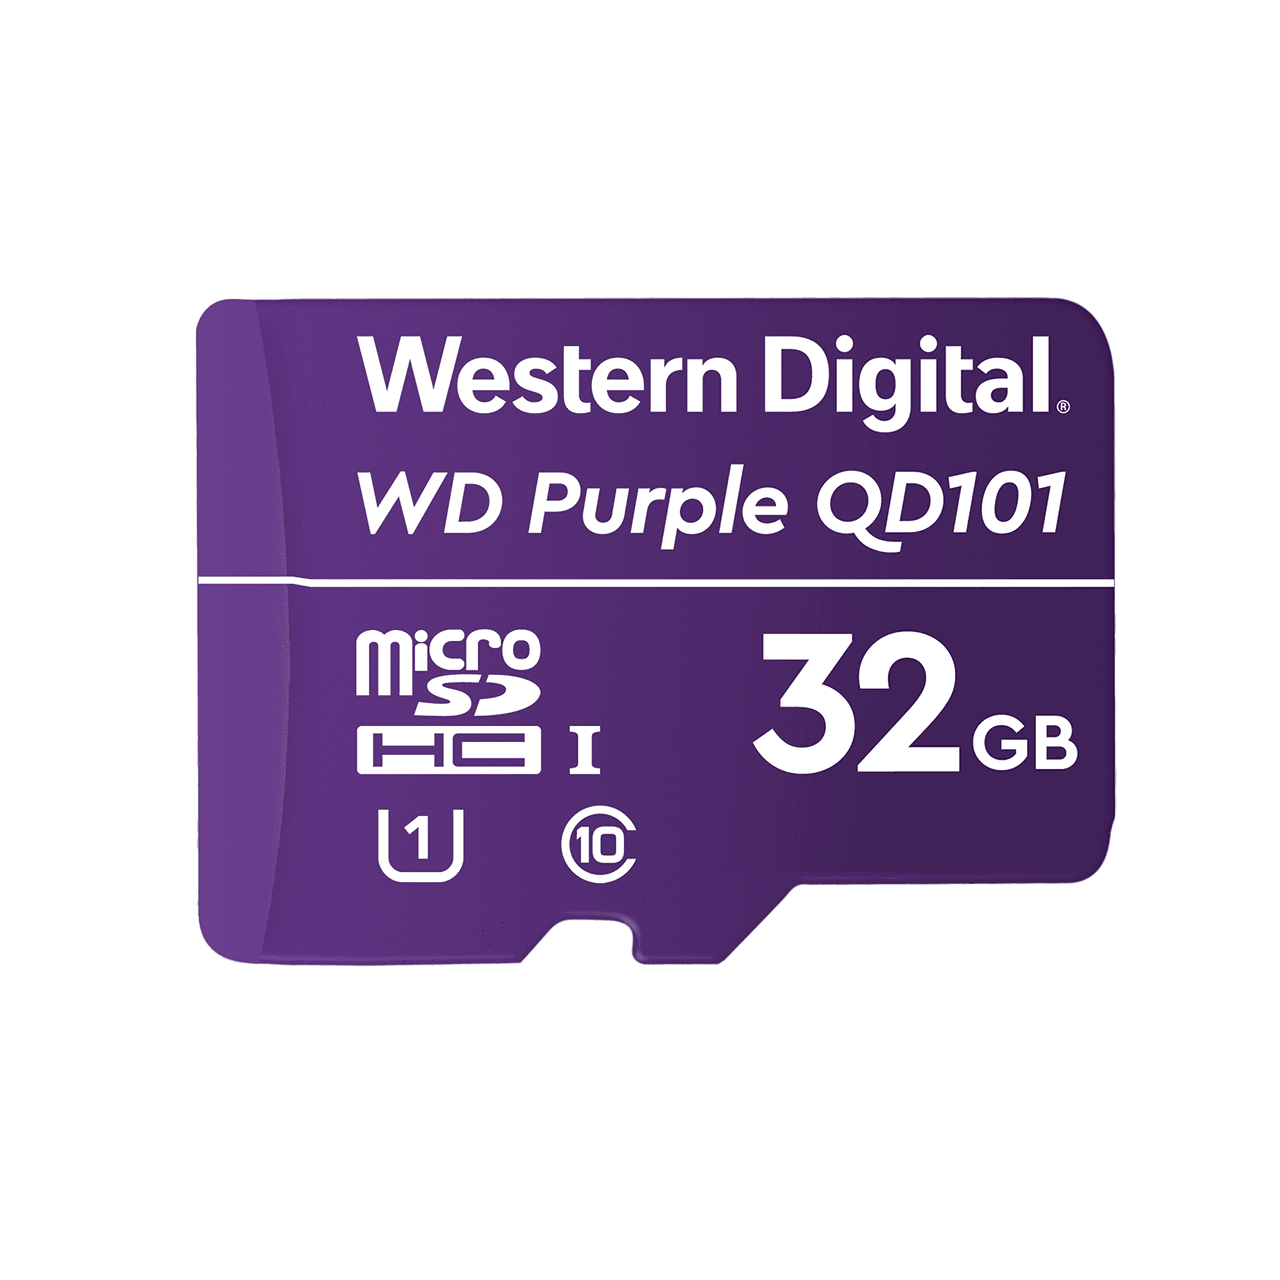 Western Digital WD Purple SC QD101